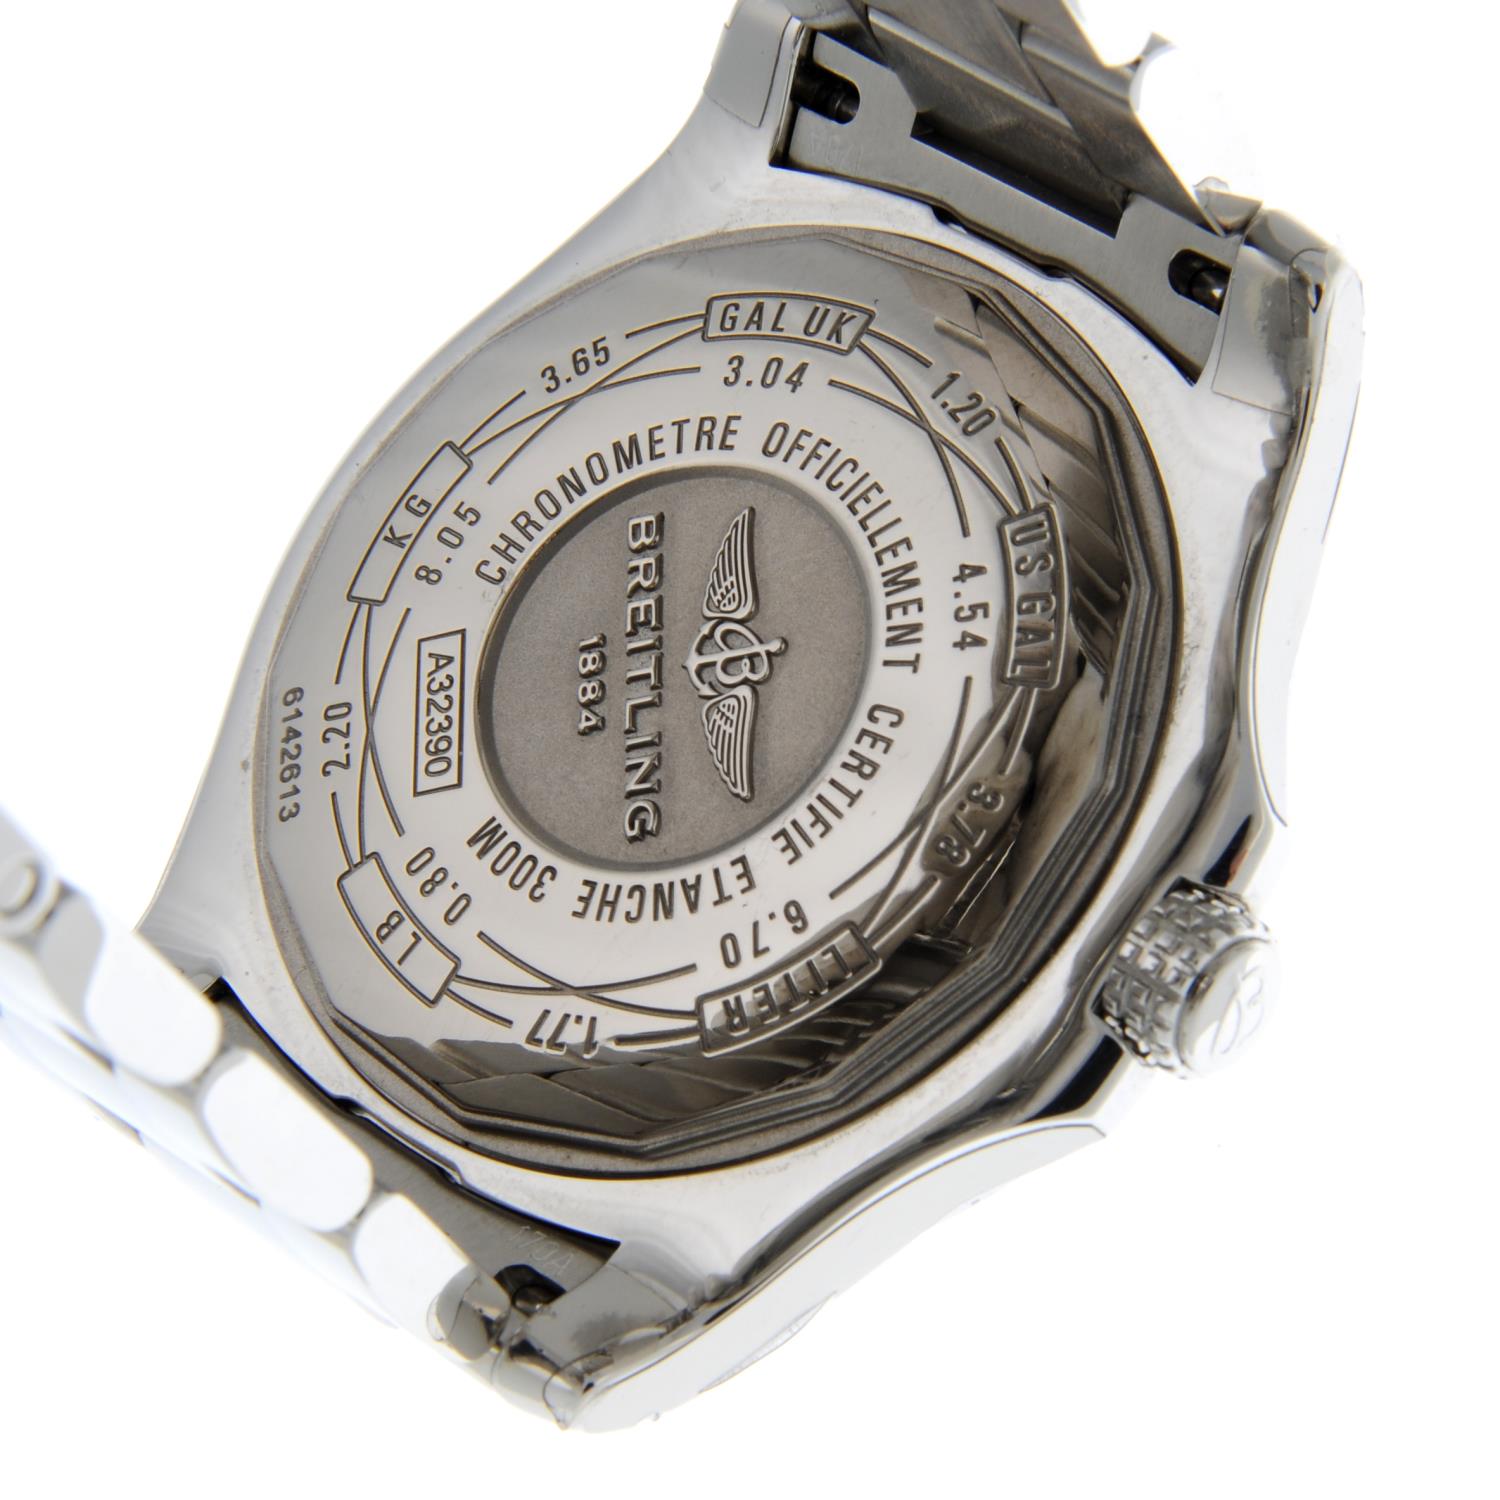 BREITLING - an Avenger II GMT braceletwatch. - Image 5 of 5